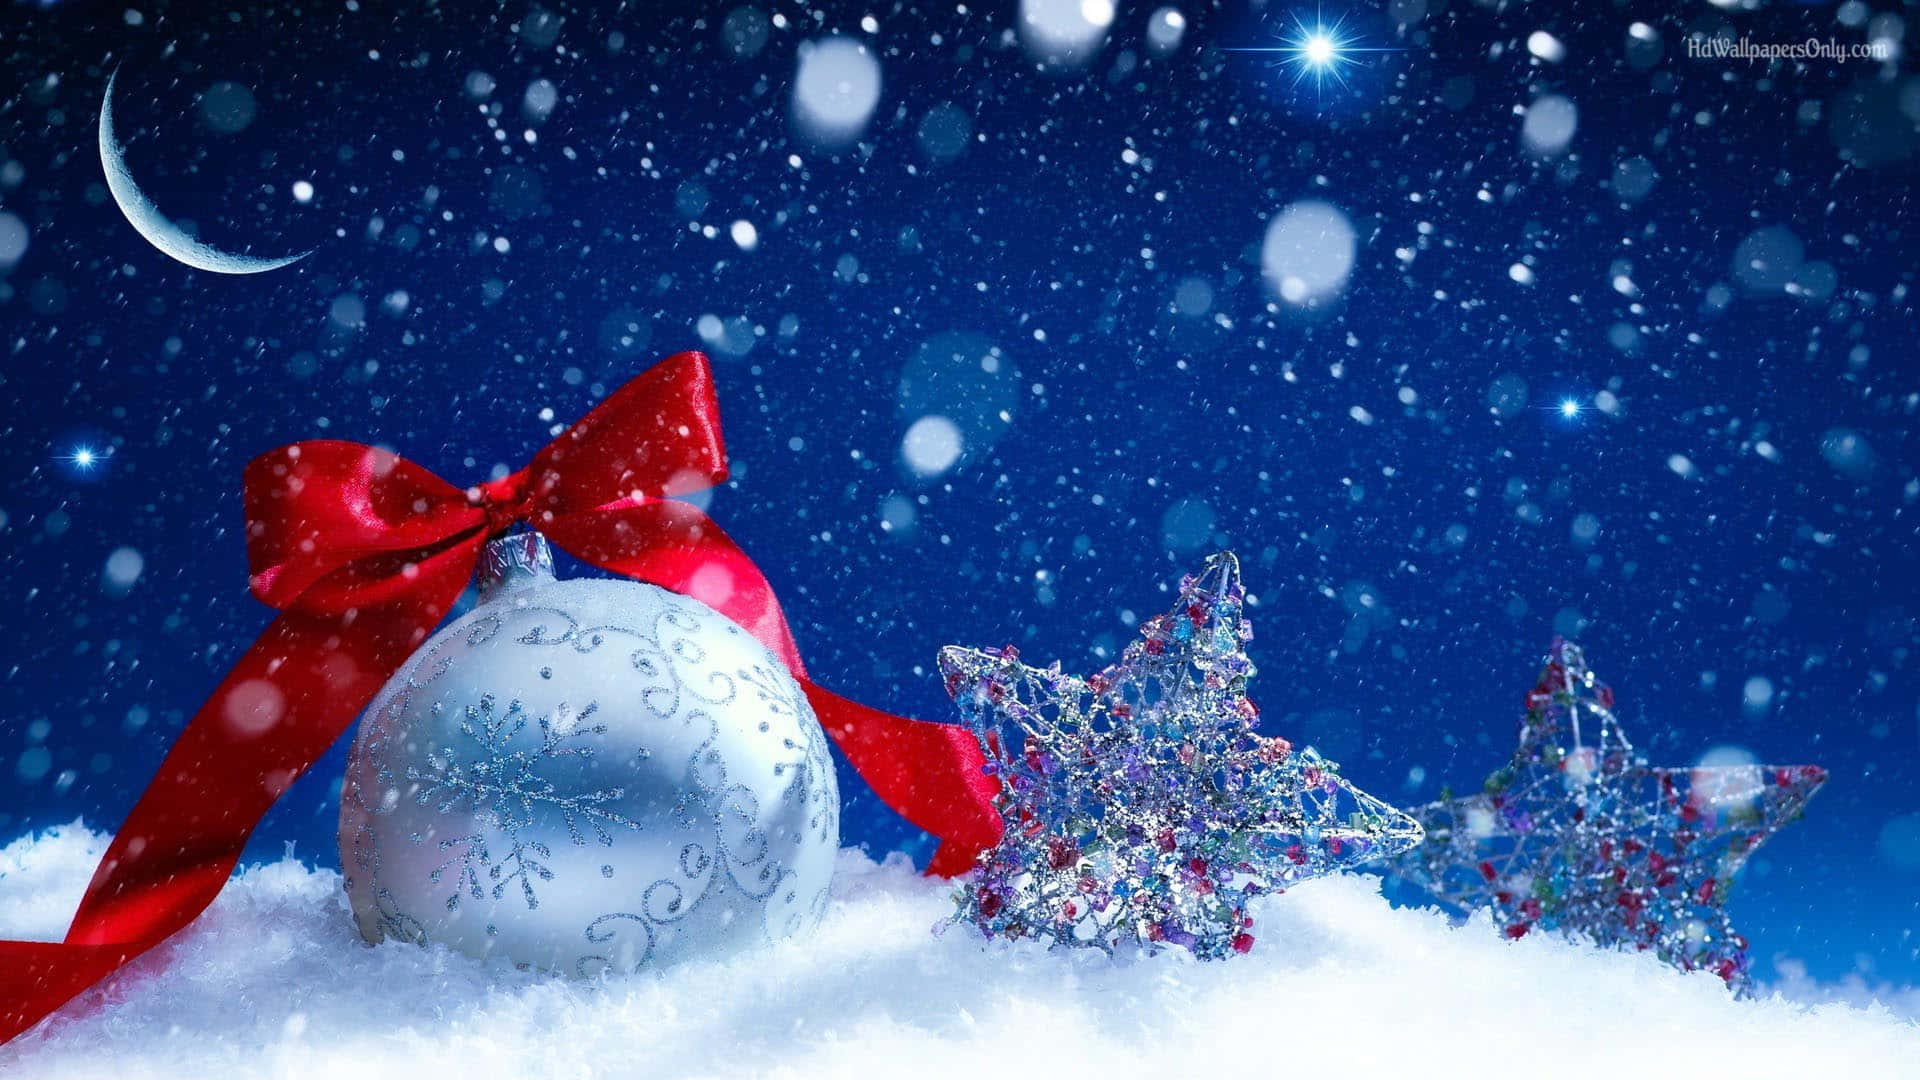 Tangled in the beauty of Christmas Winter Wonderland Wallpaper